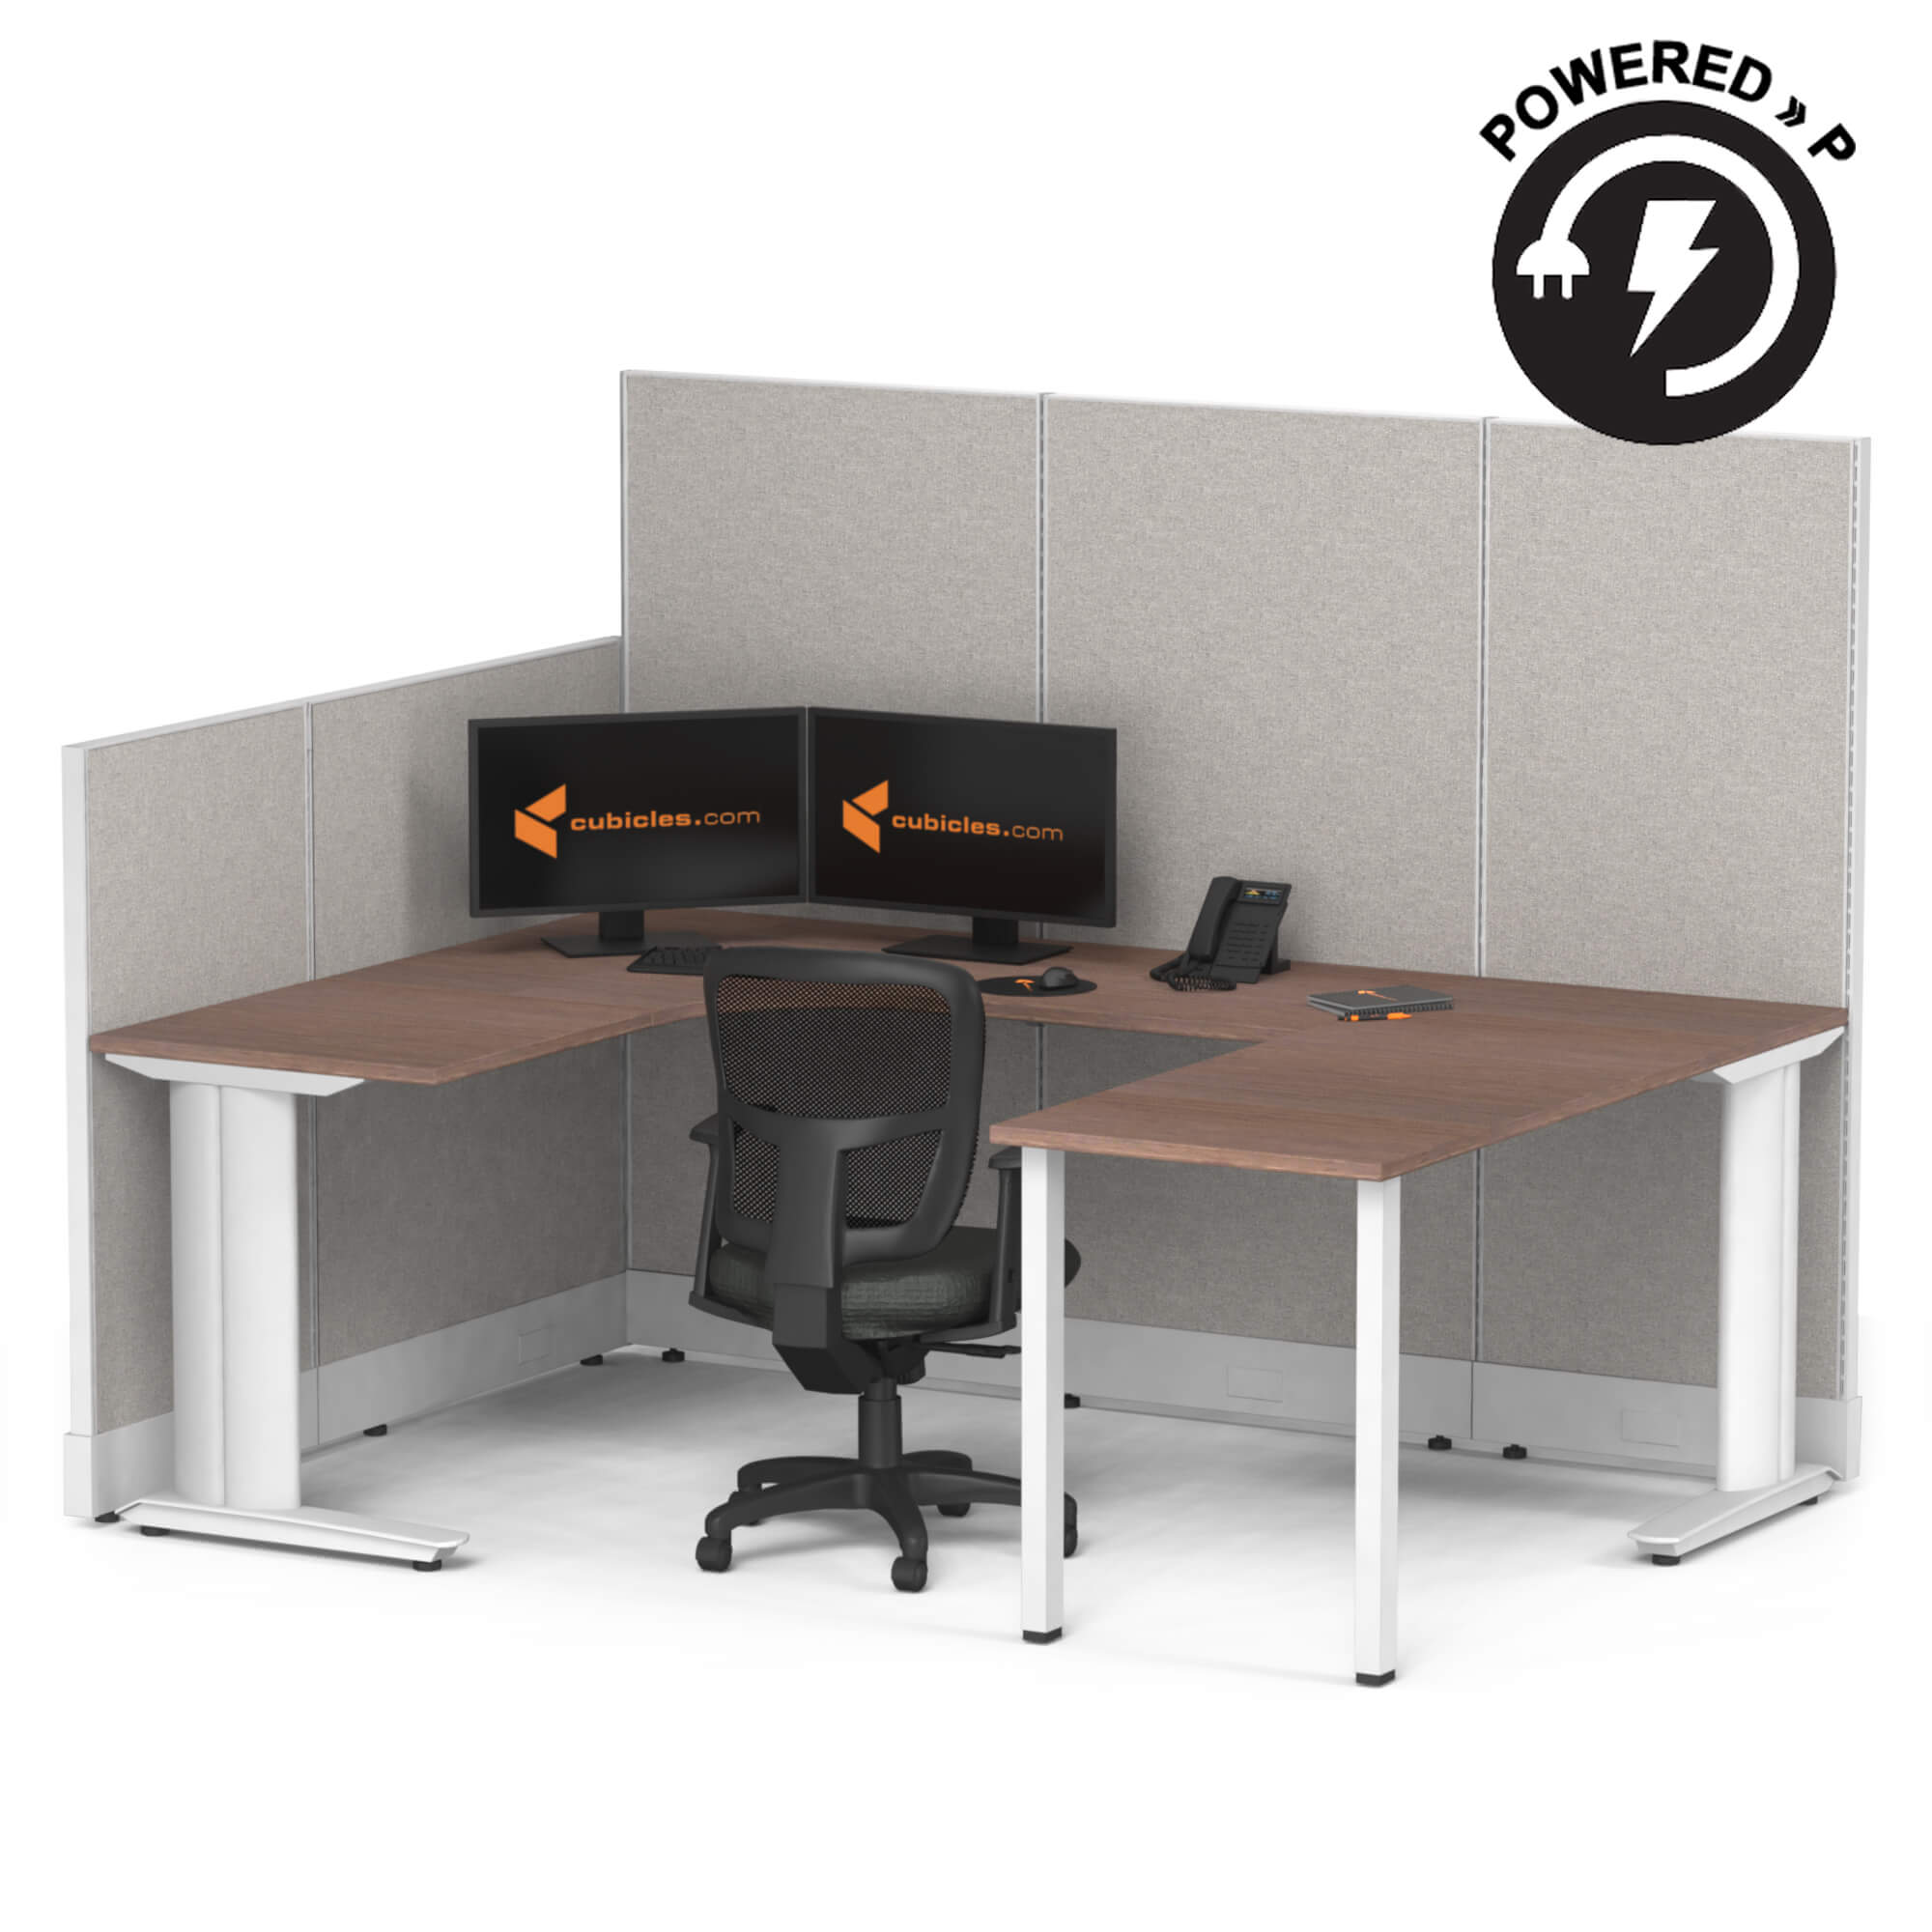 cubicle-desk-u-shaped-1pack-powered.jpg